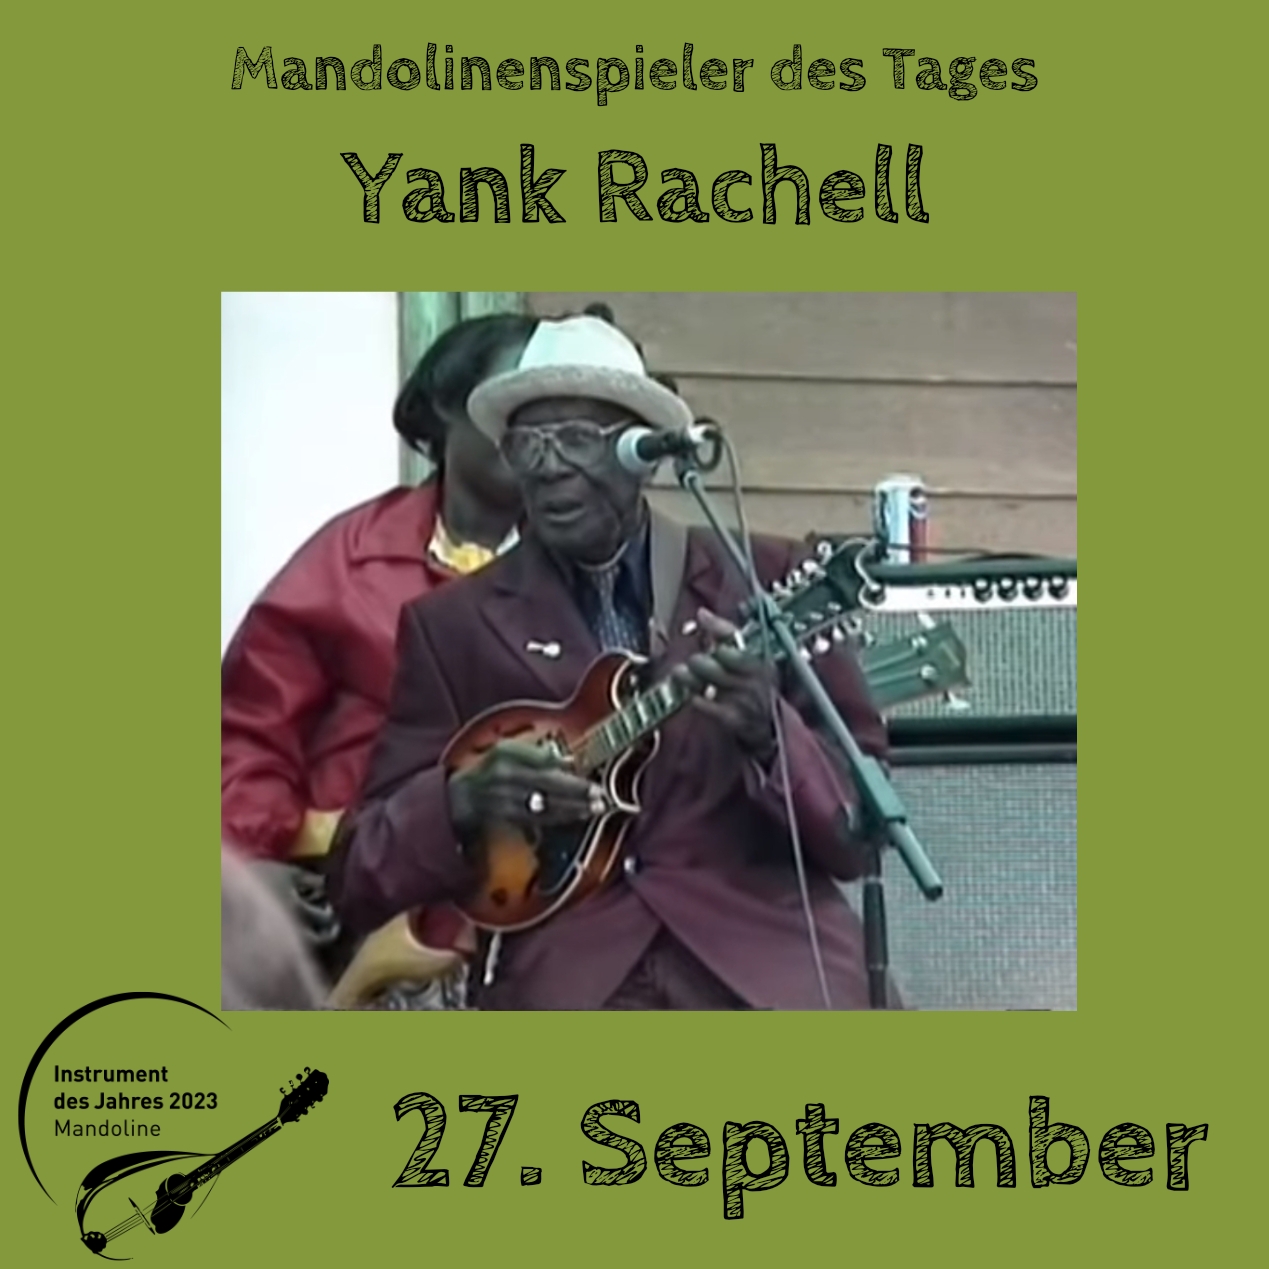 27. September - Yank Rachell  Mandoline Instrument des Jahres 2023 Mandolinenspieler Mandolinenspielerin des Tages